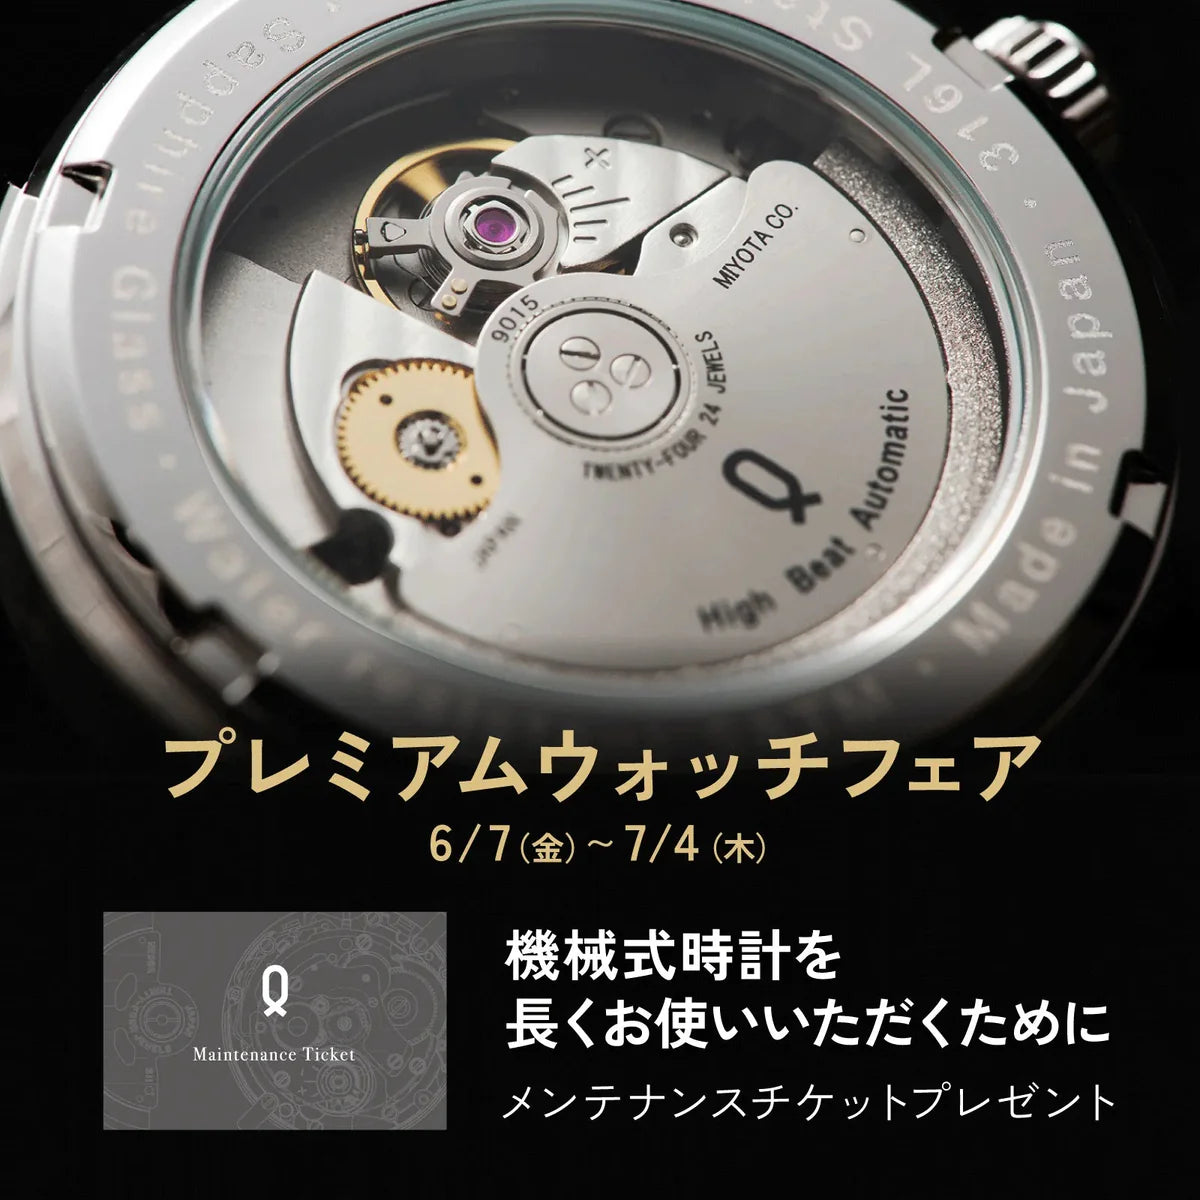 Knot ATC-40SVWH 機械式腕時計 メンズ 自動巻き ホワイト 日本製 40mm クロノグラフ – Maker's Watch Knot